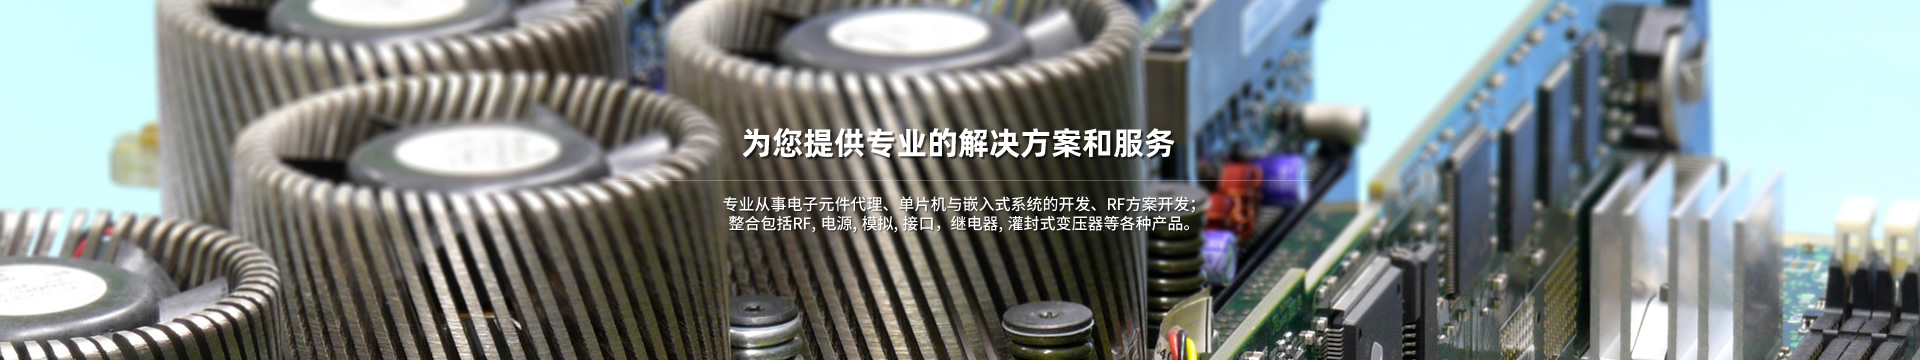 AZSR165-充电桩系列-上海杰纳电子科技有限公司-上海杰纳电子科技有限公司